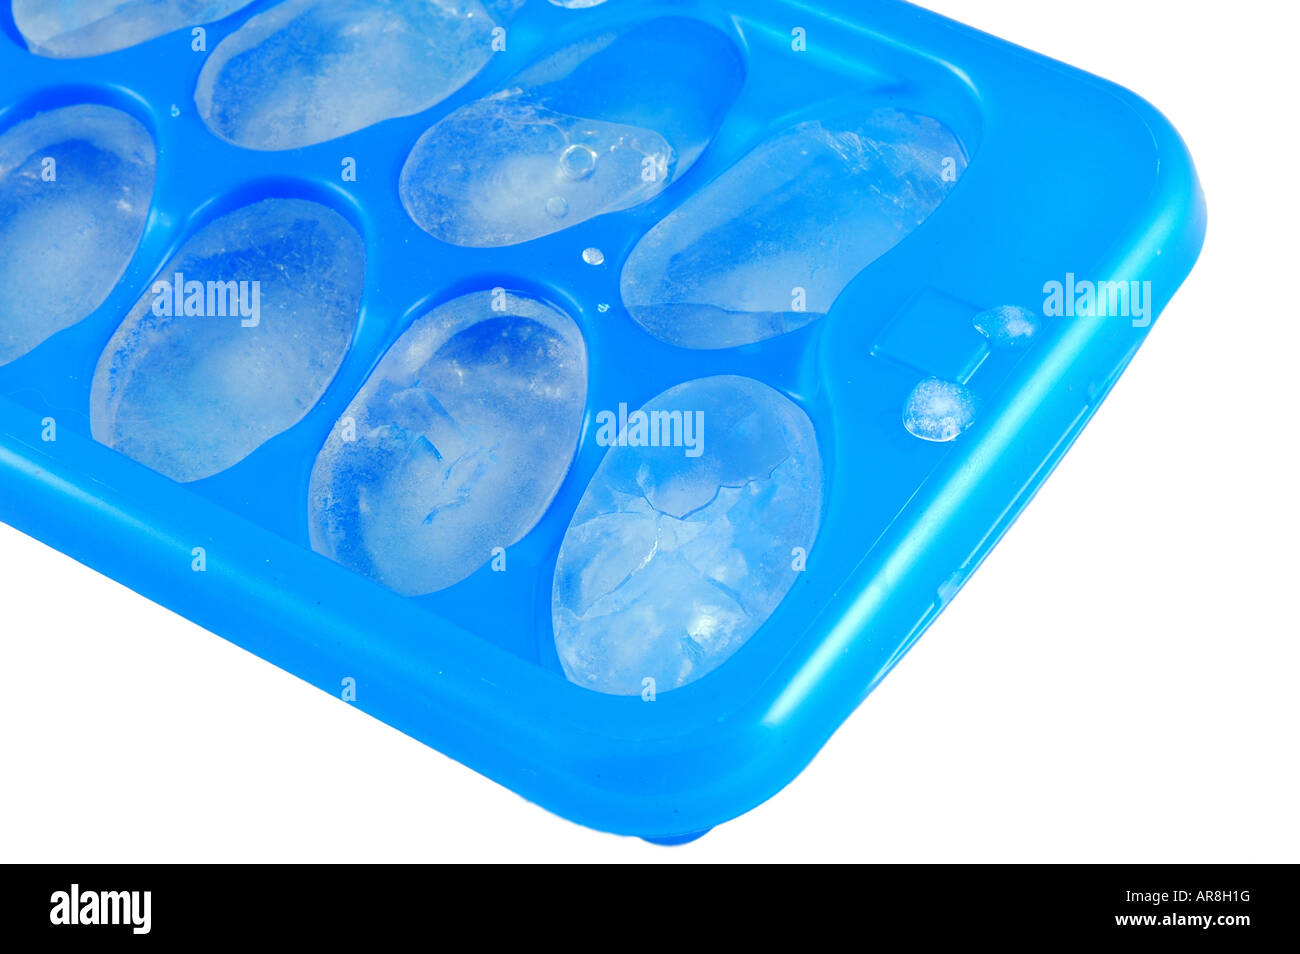 https://c8.alamy.com/comp/AR8H1G/closeup-of-a-tray-with-frozen-ice-cubes-AR8H1G.jpg